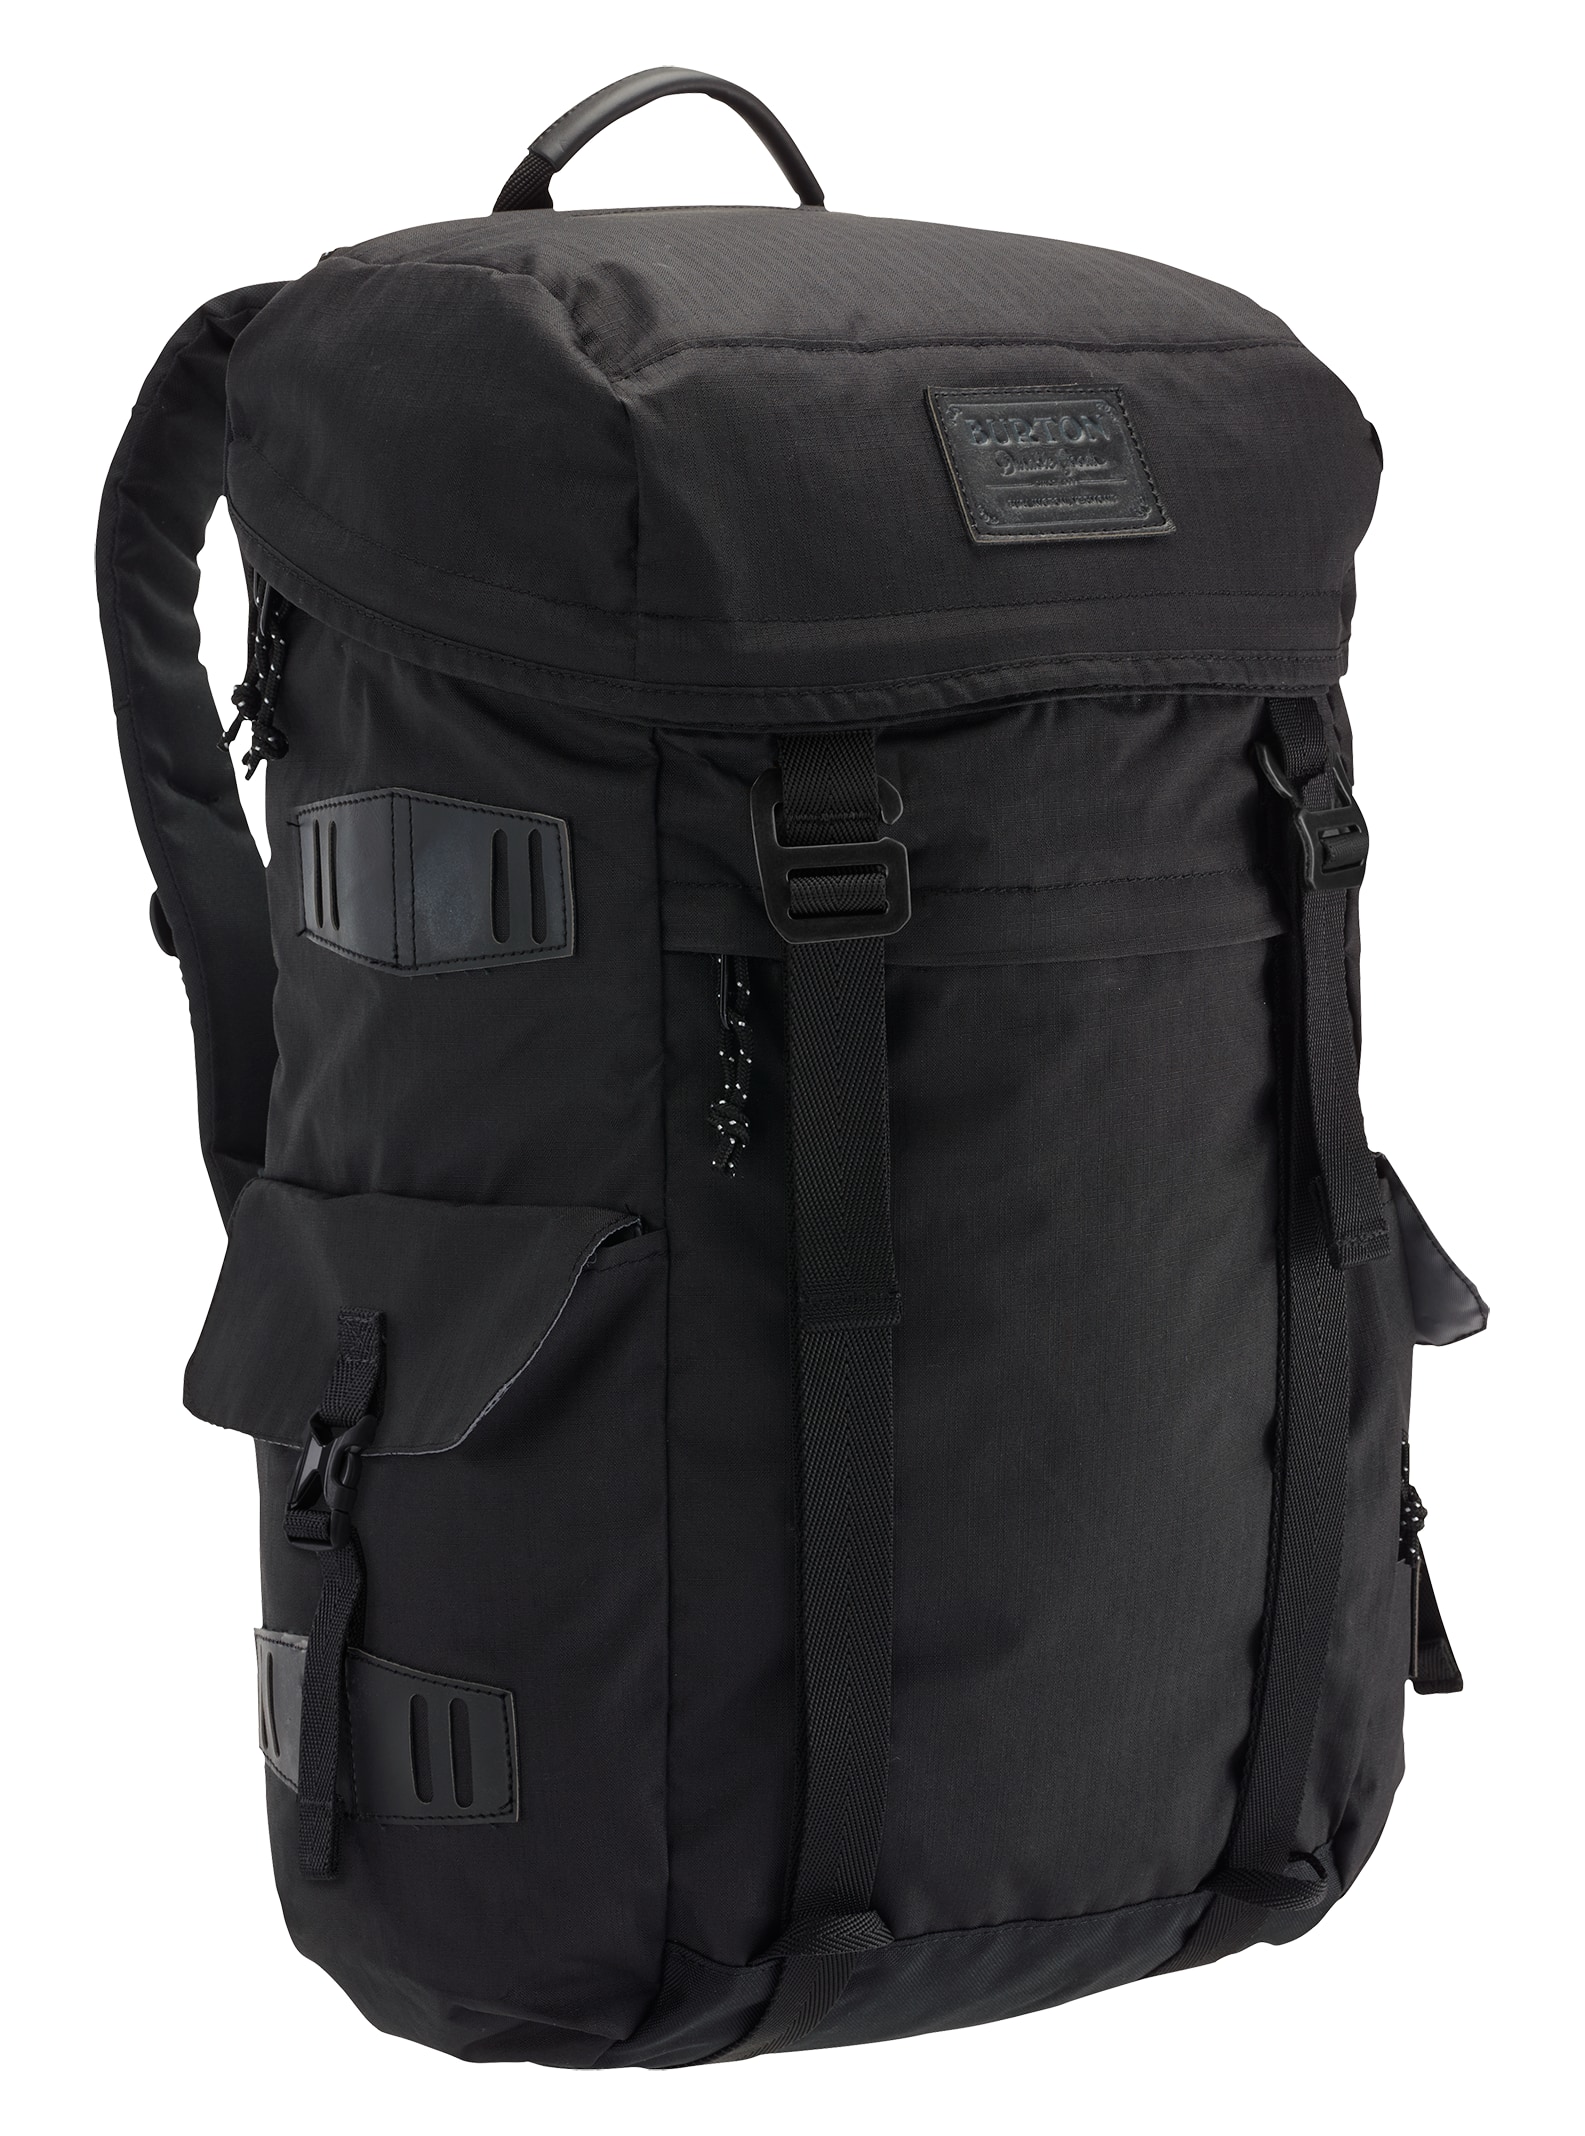 Burton Annex 28L Backpack | Burton.com Spring 2020 JP